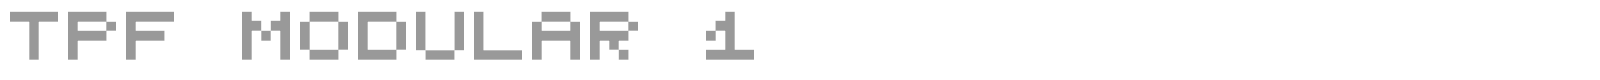 Font TPF Modular Symbol